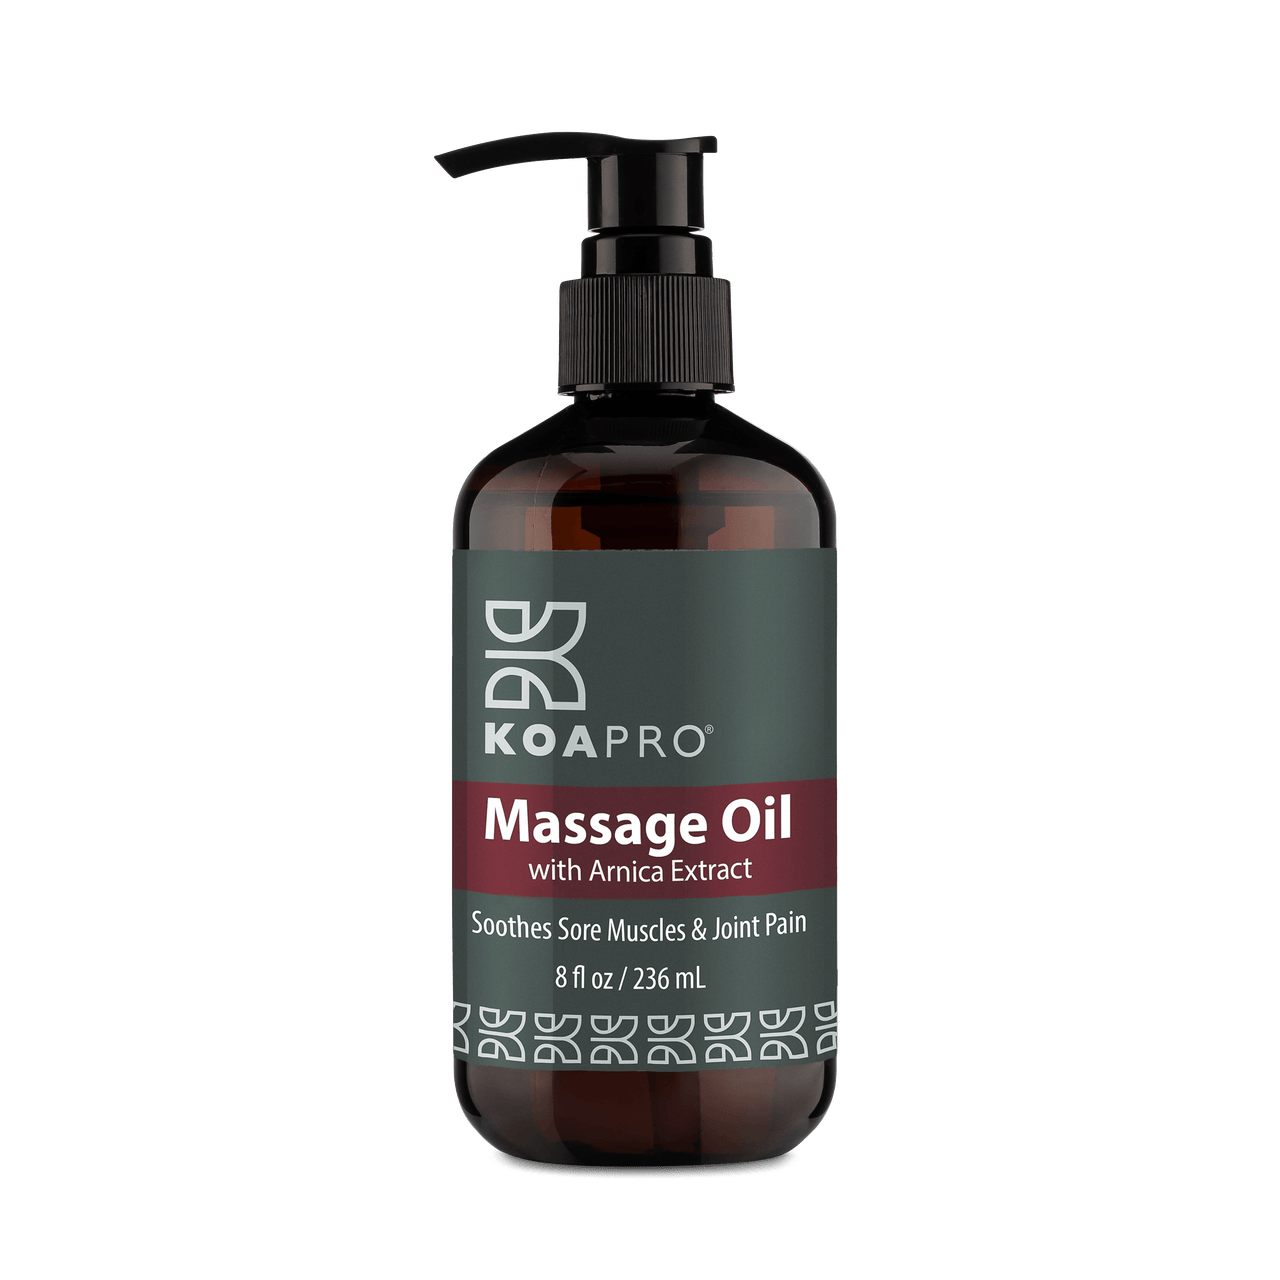 KOAPRO Massage Oil - Bottle image showing front label.